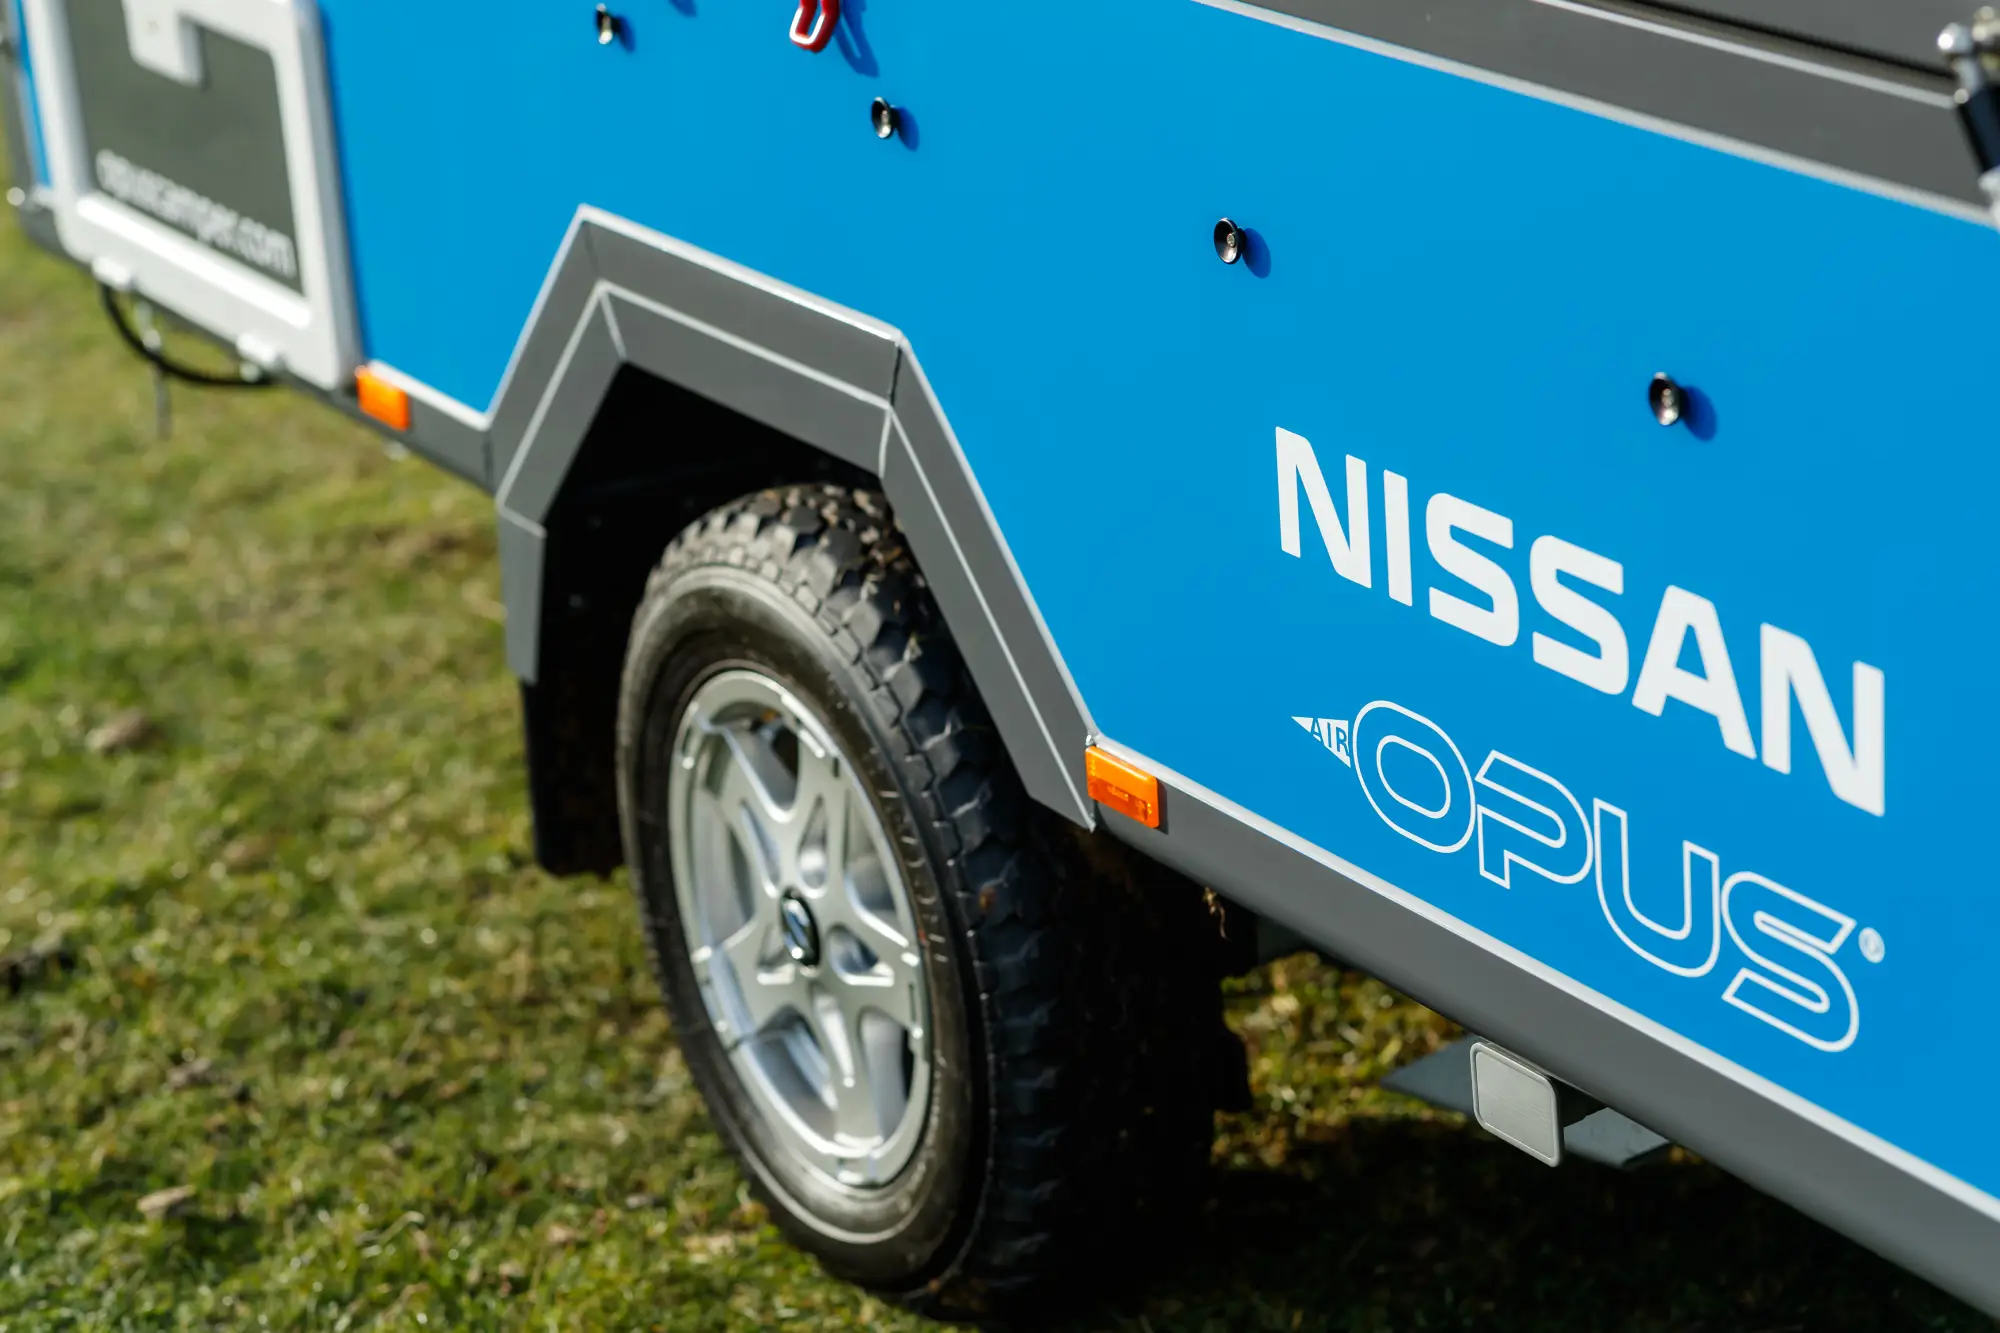 Nissan OPUS - Concept camper - 8